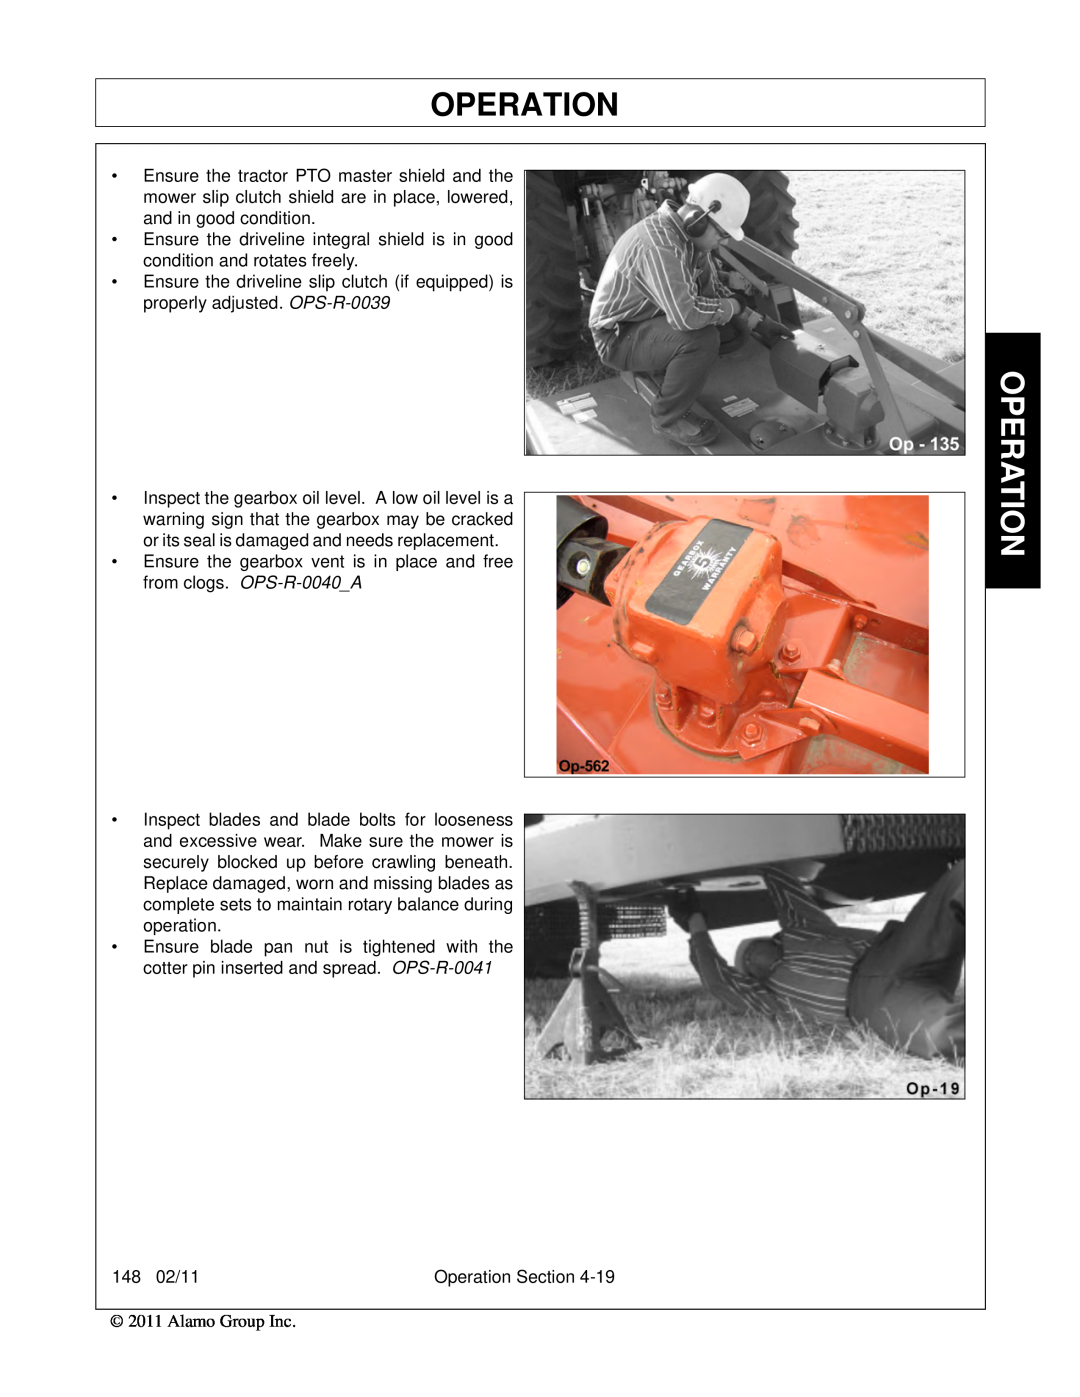 Rhino Mounts 148 manual Operation 